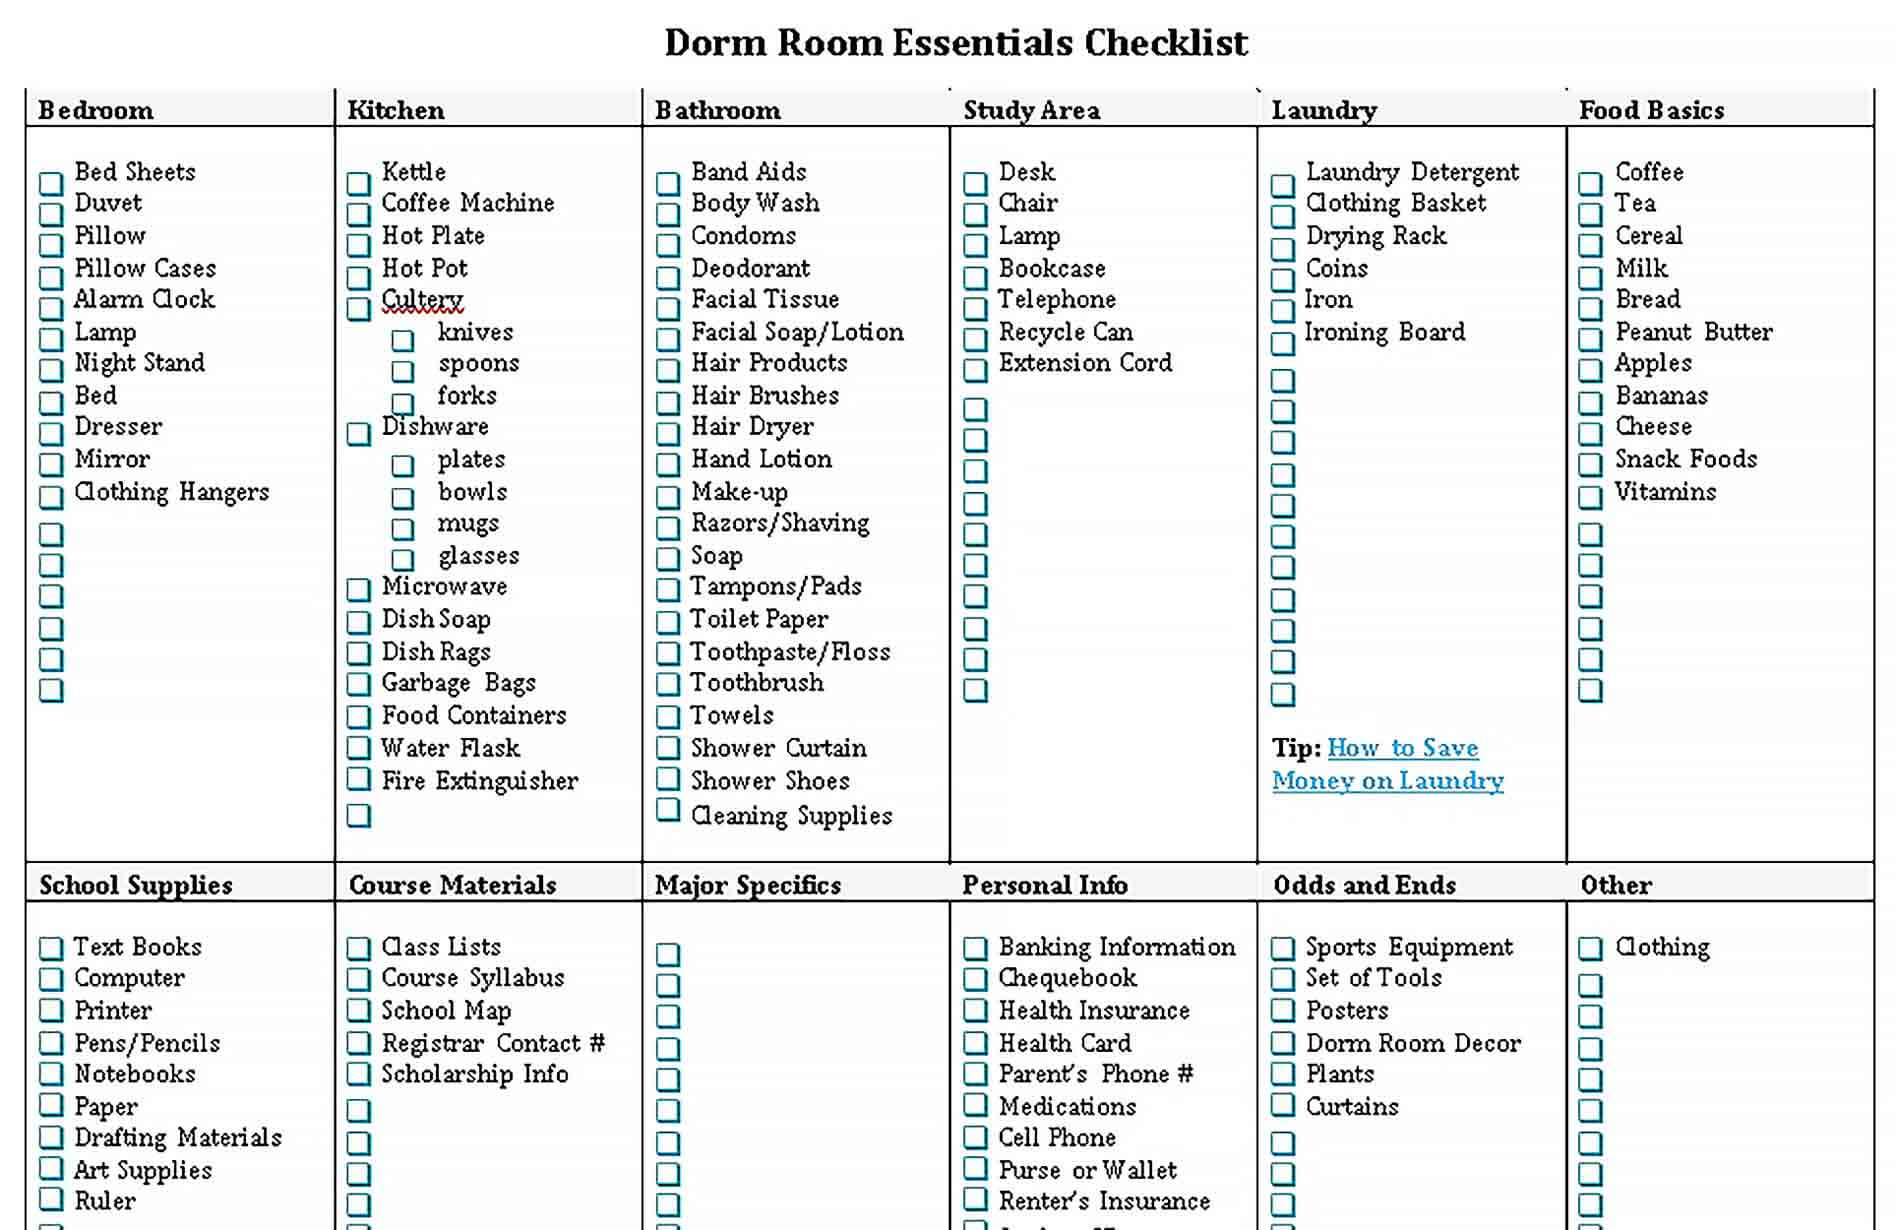 Sample Dorm Room Essentials Checklist